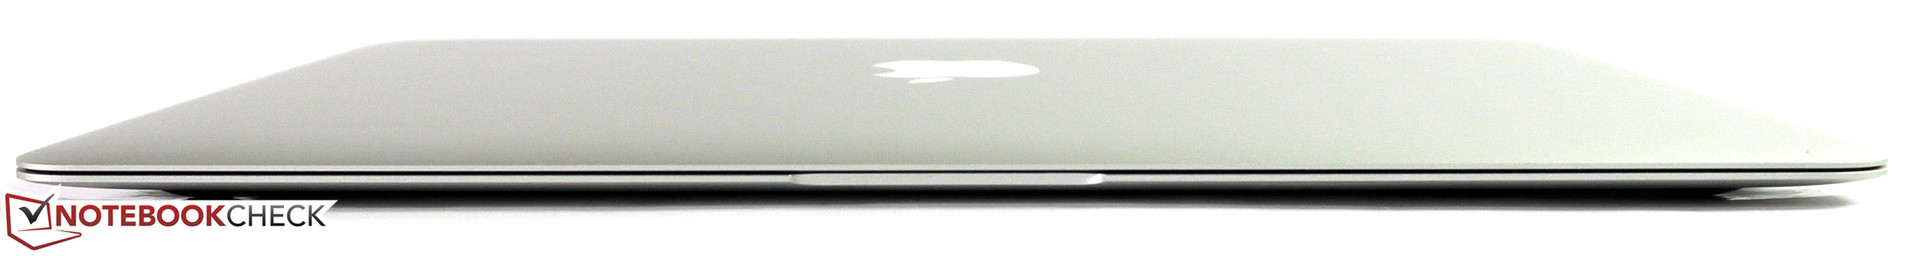 Review Apple Macbook Air 13 Mid 13 Md760d A Subnotebook Notebookcheck Net Reviews